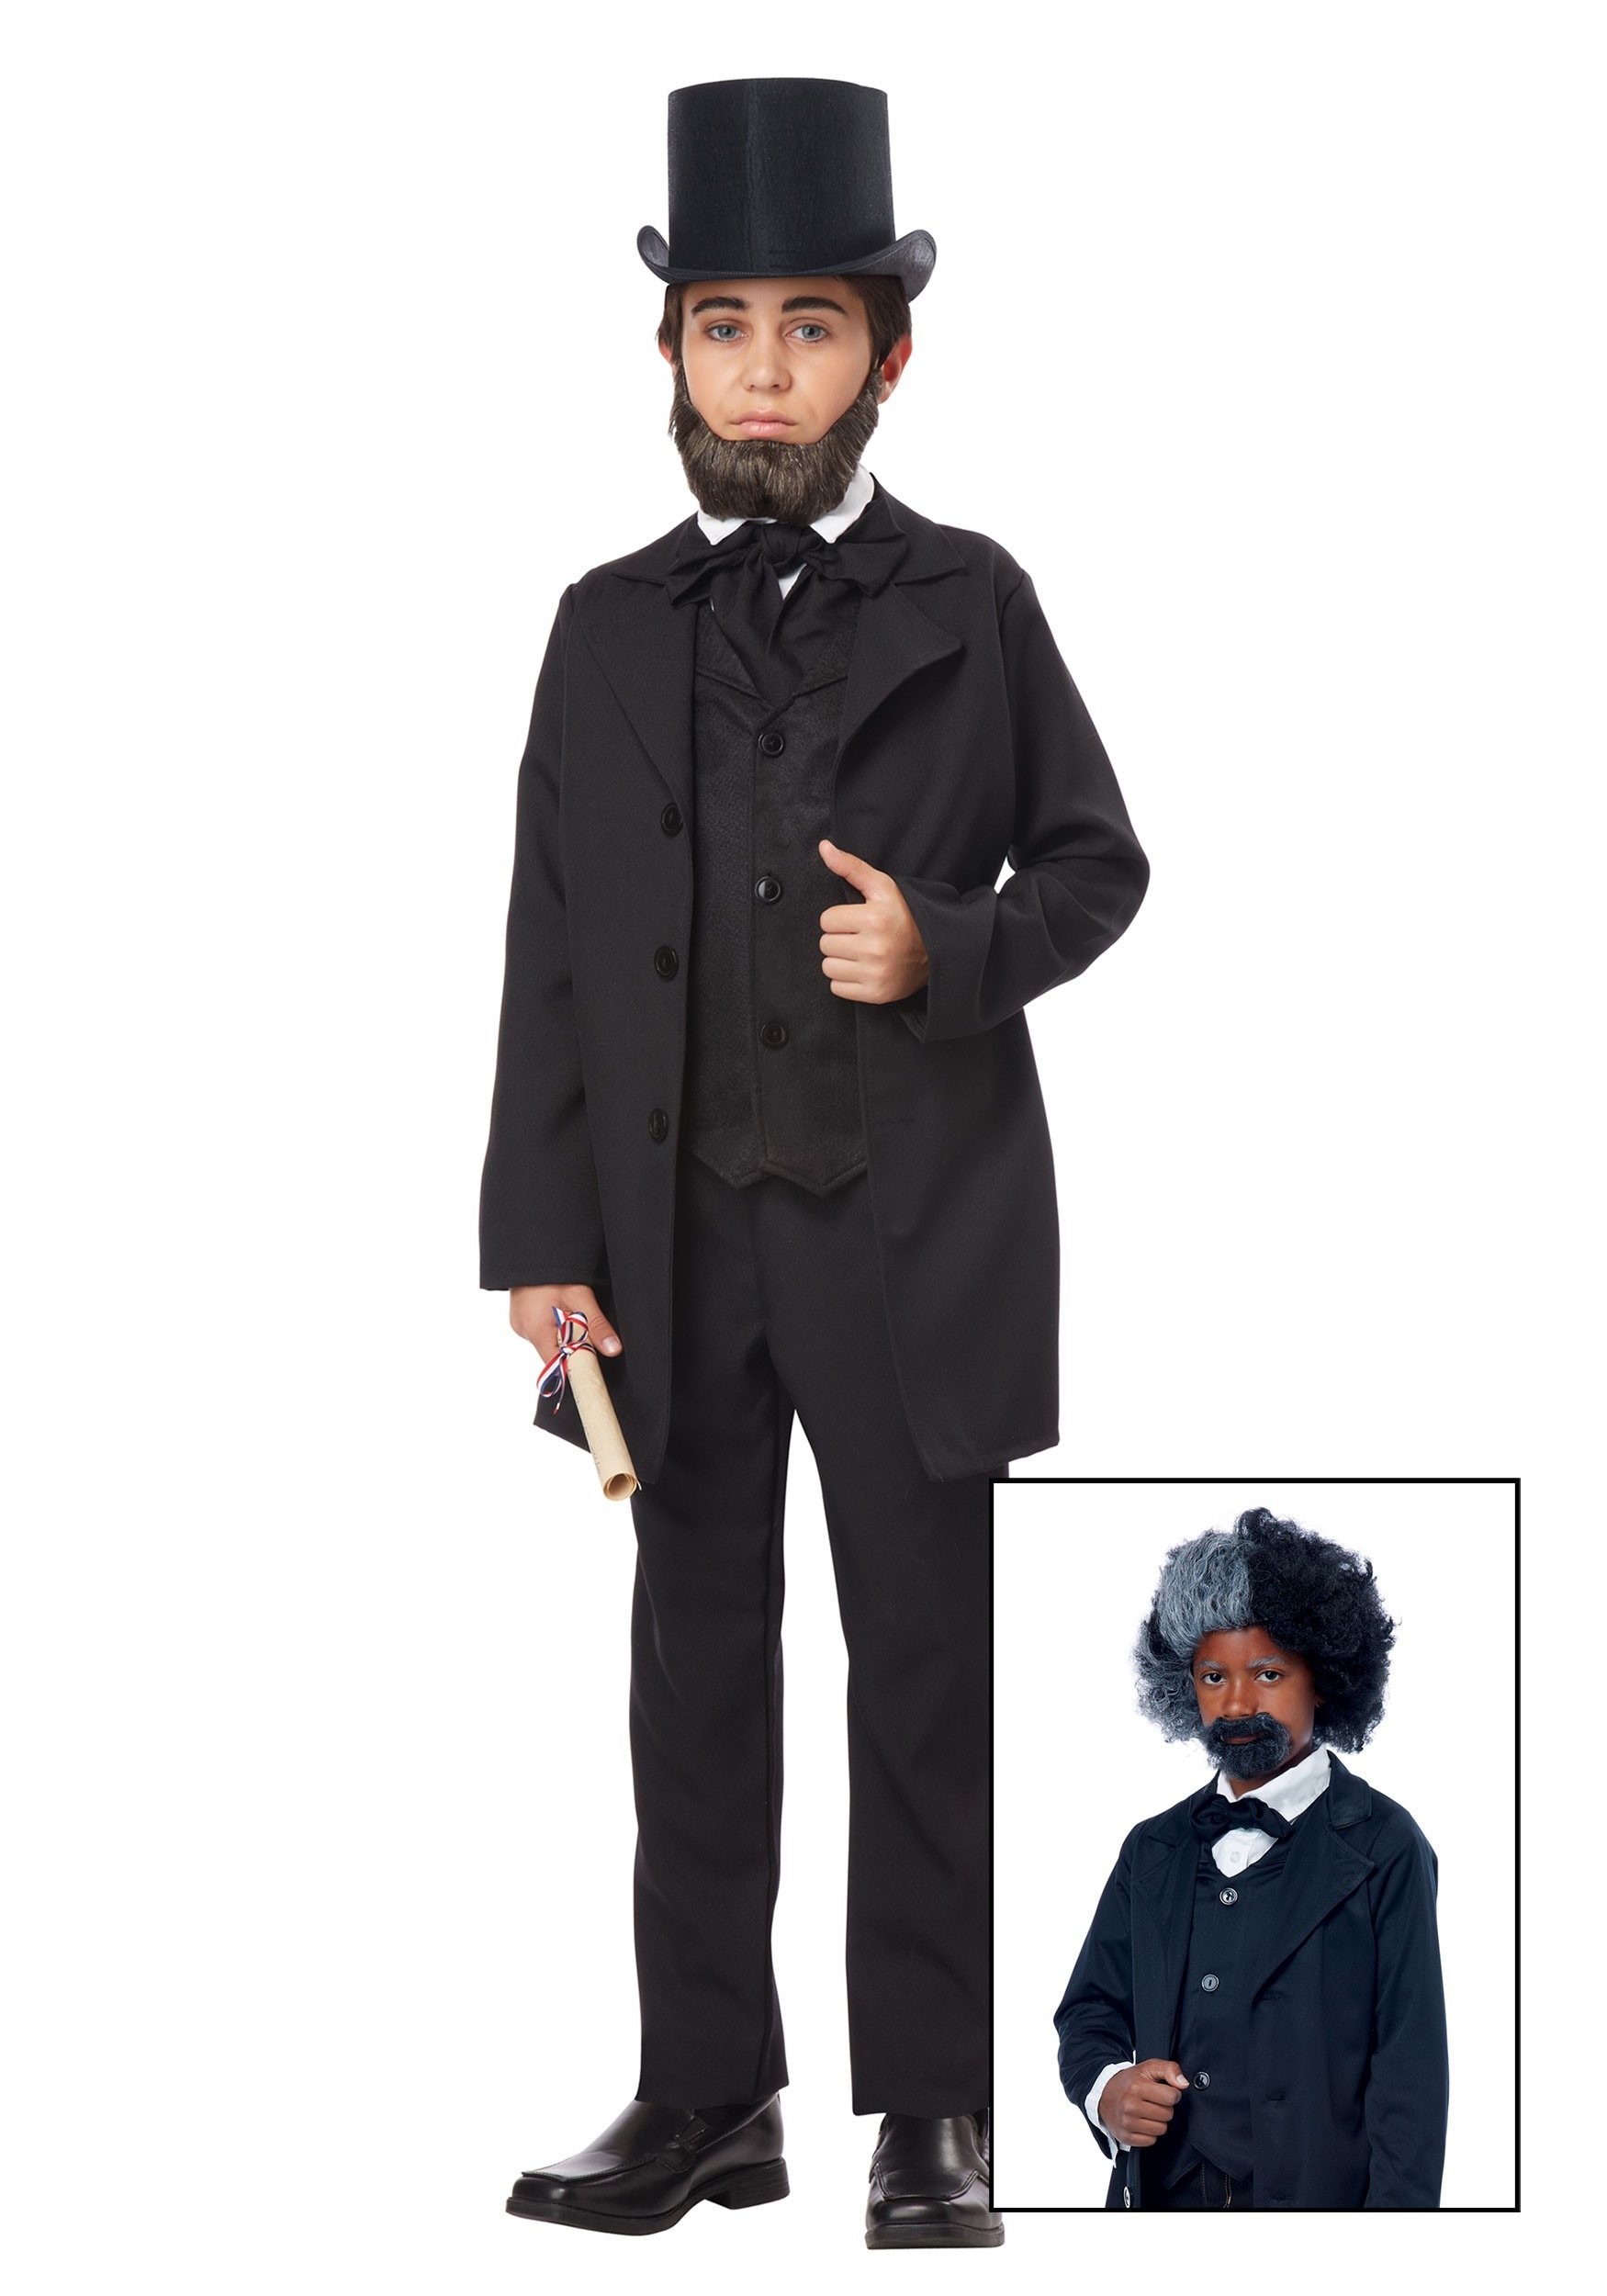 Frederick Douglass/ Abraham Lincoln Costume For Kids